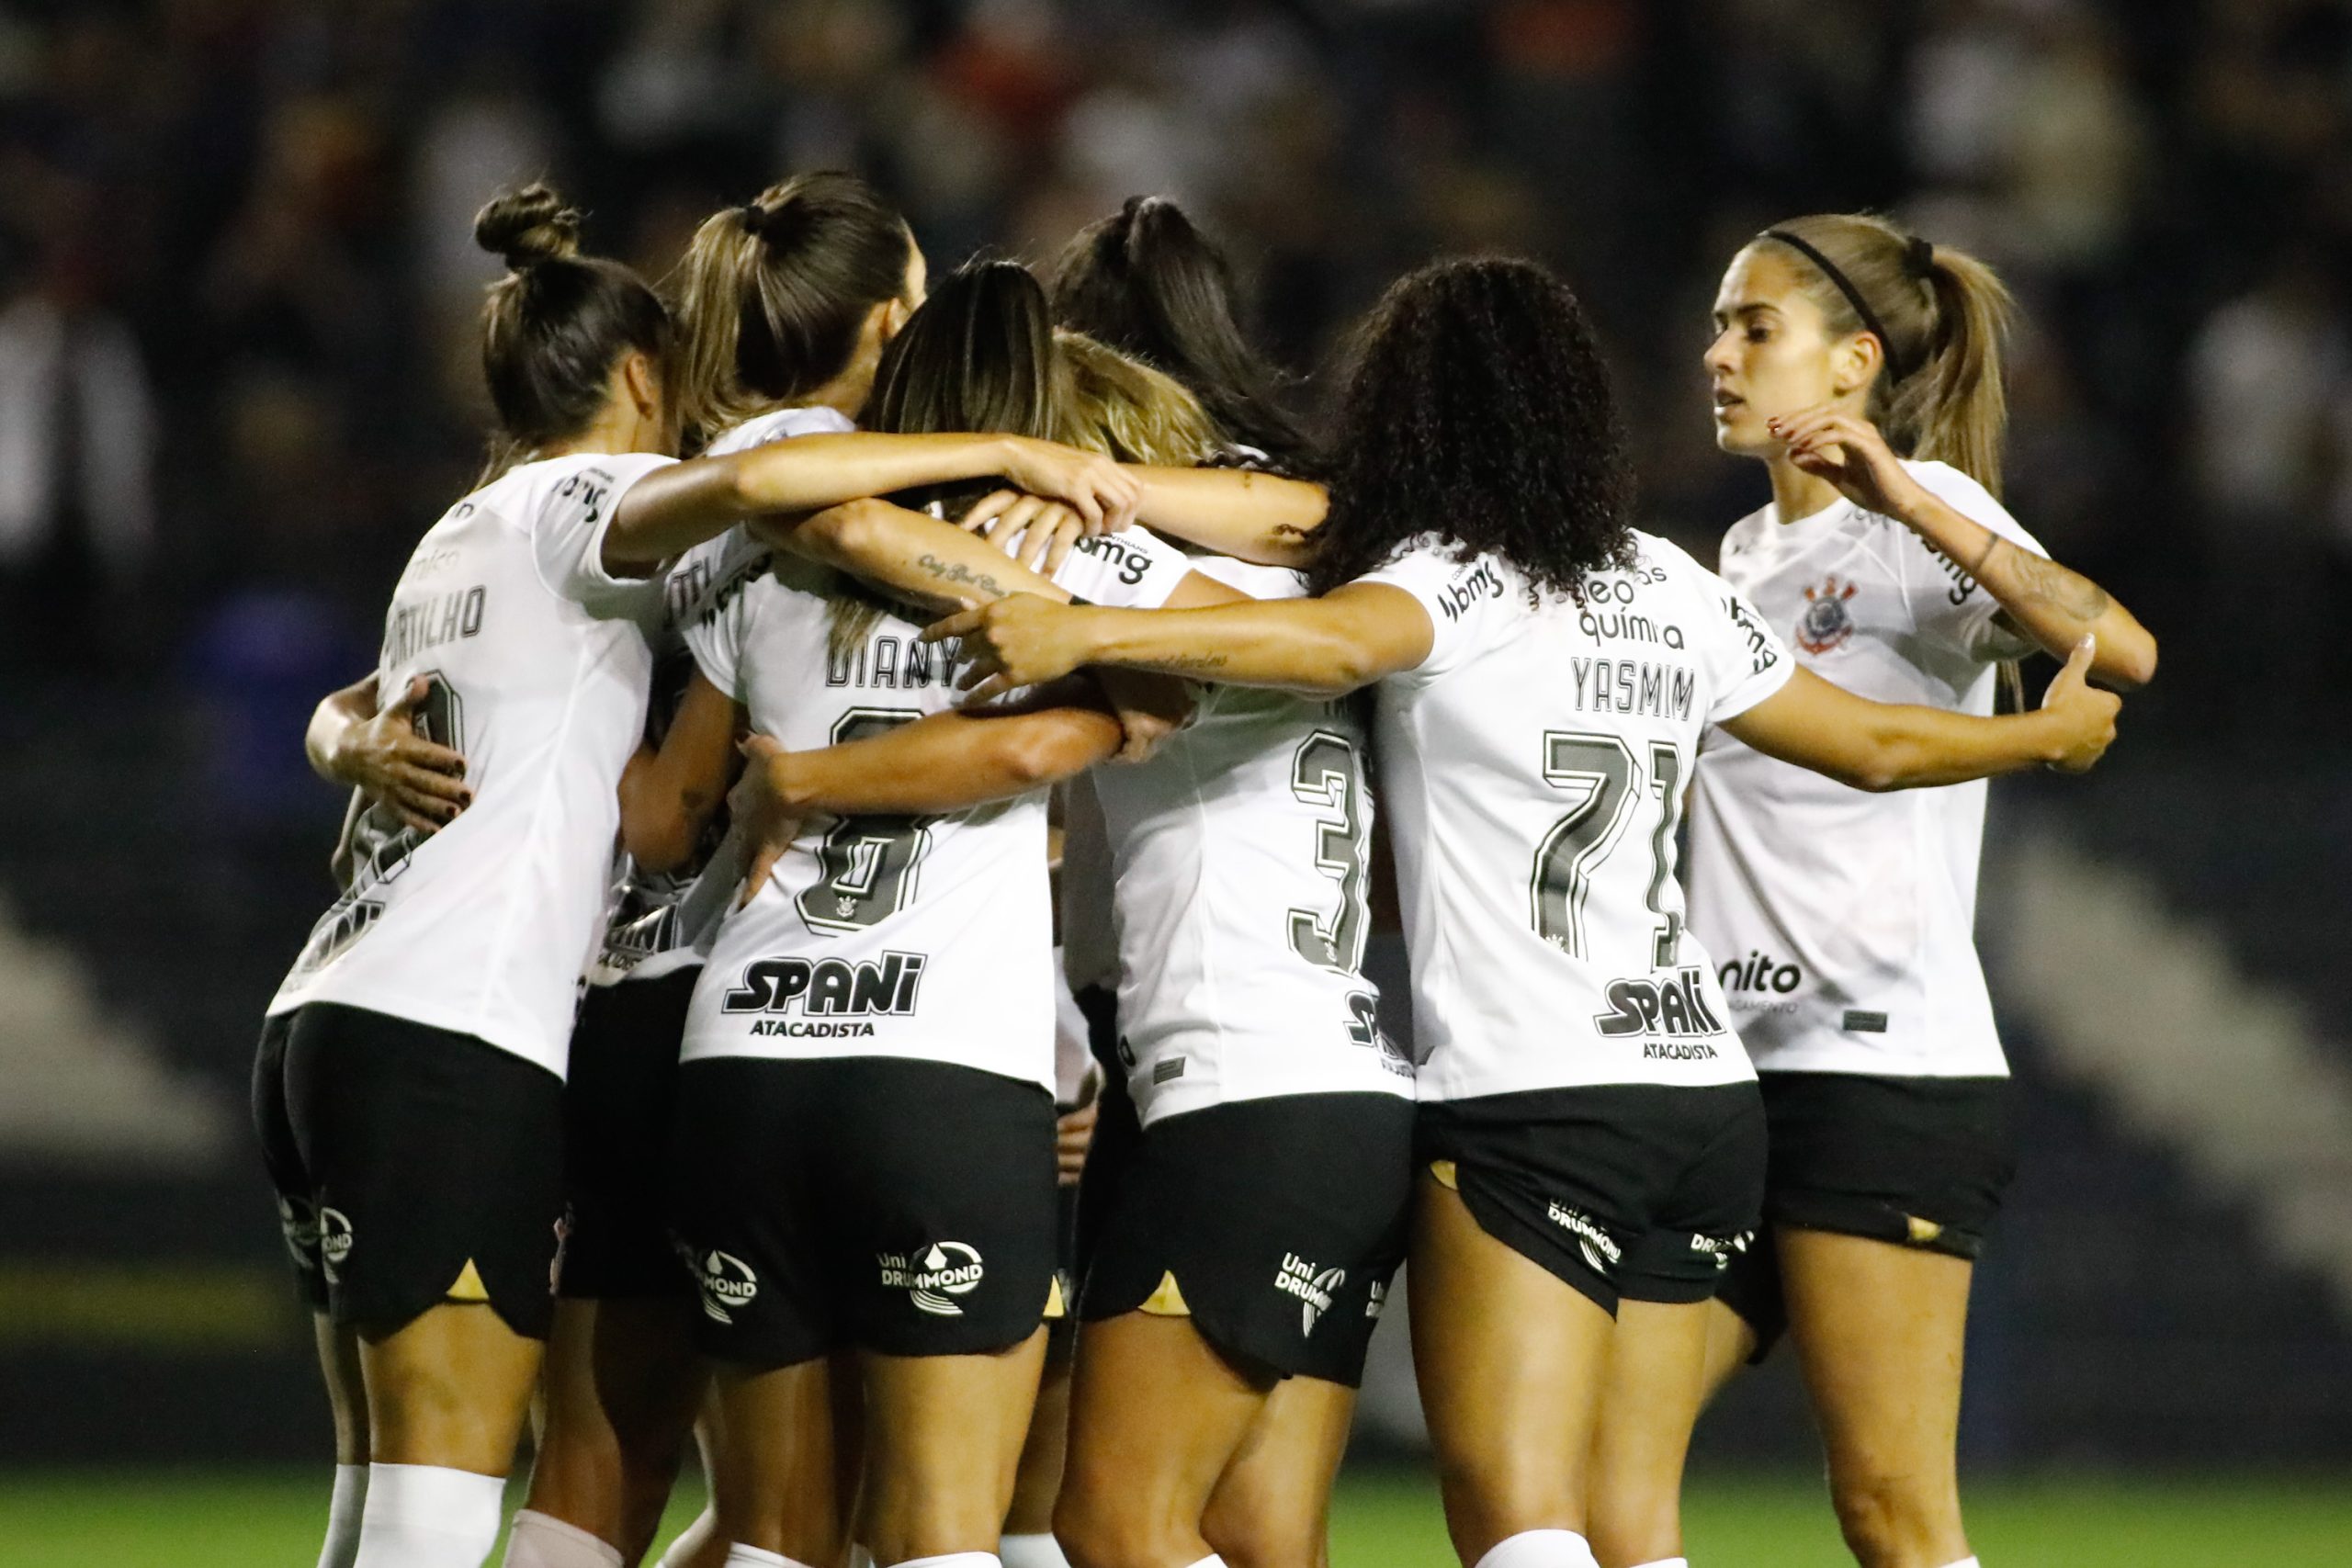 Corinthians divulga venda de ingressos de Majestoso decisivo pelo Paulista  Feminino; confira